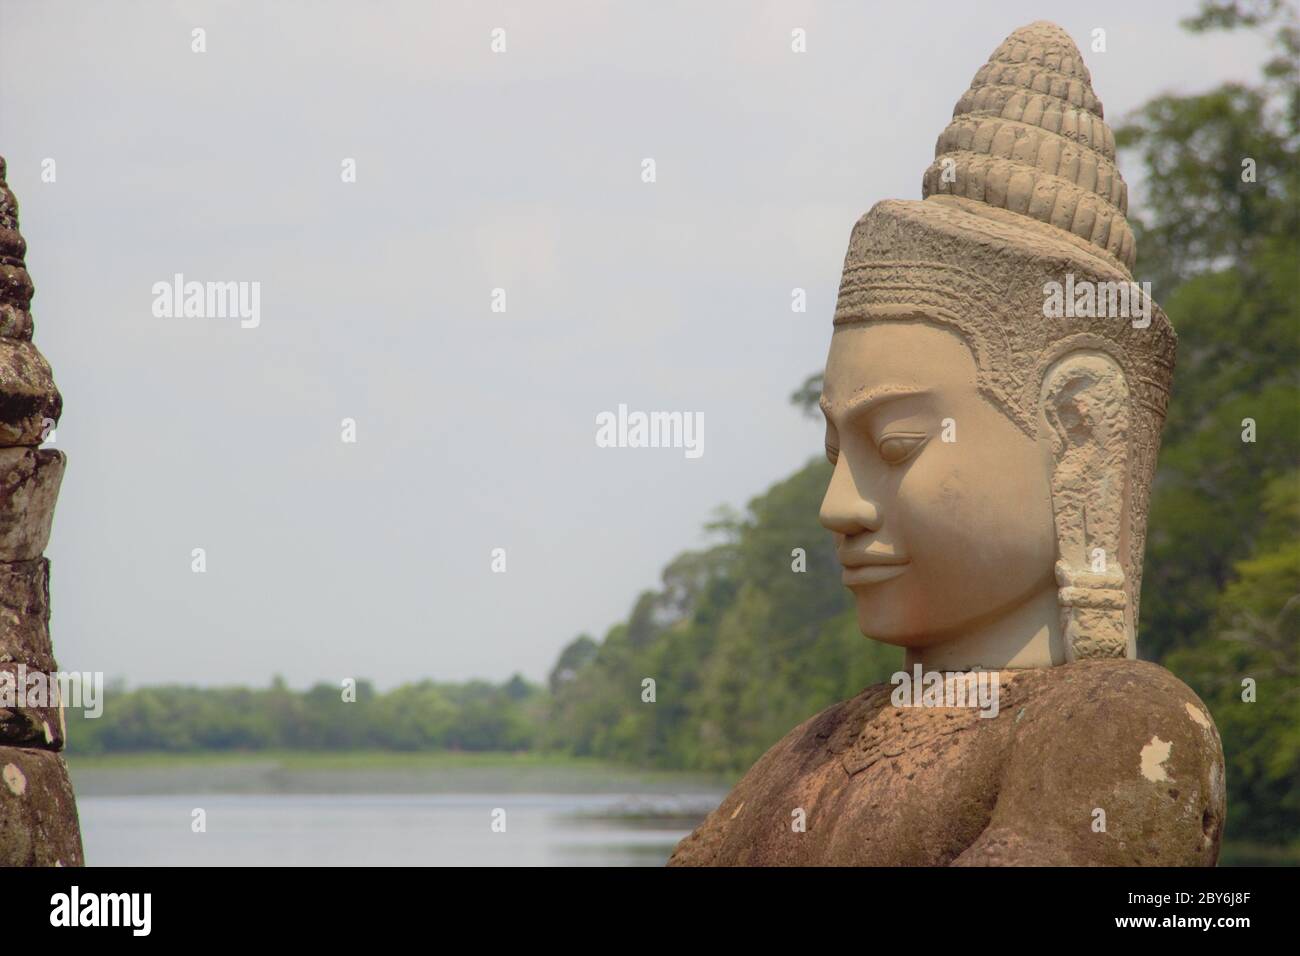 Sitting Buddha under the Cobra. Cambodia Jigsaw Puzzle by Lie Yim